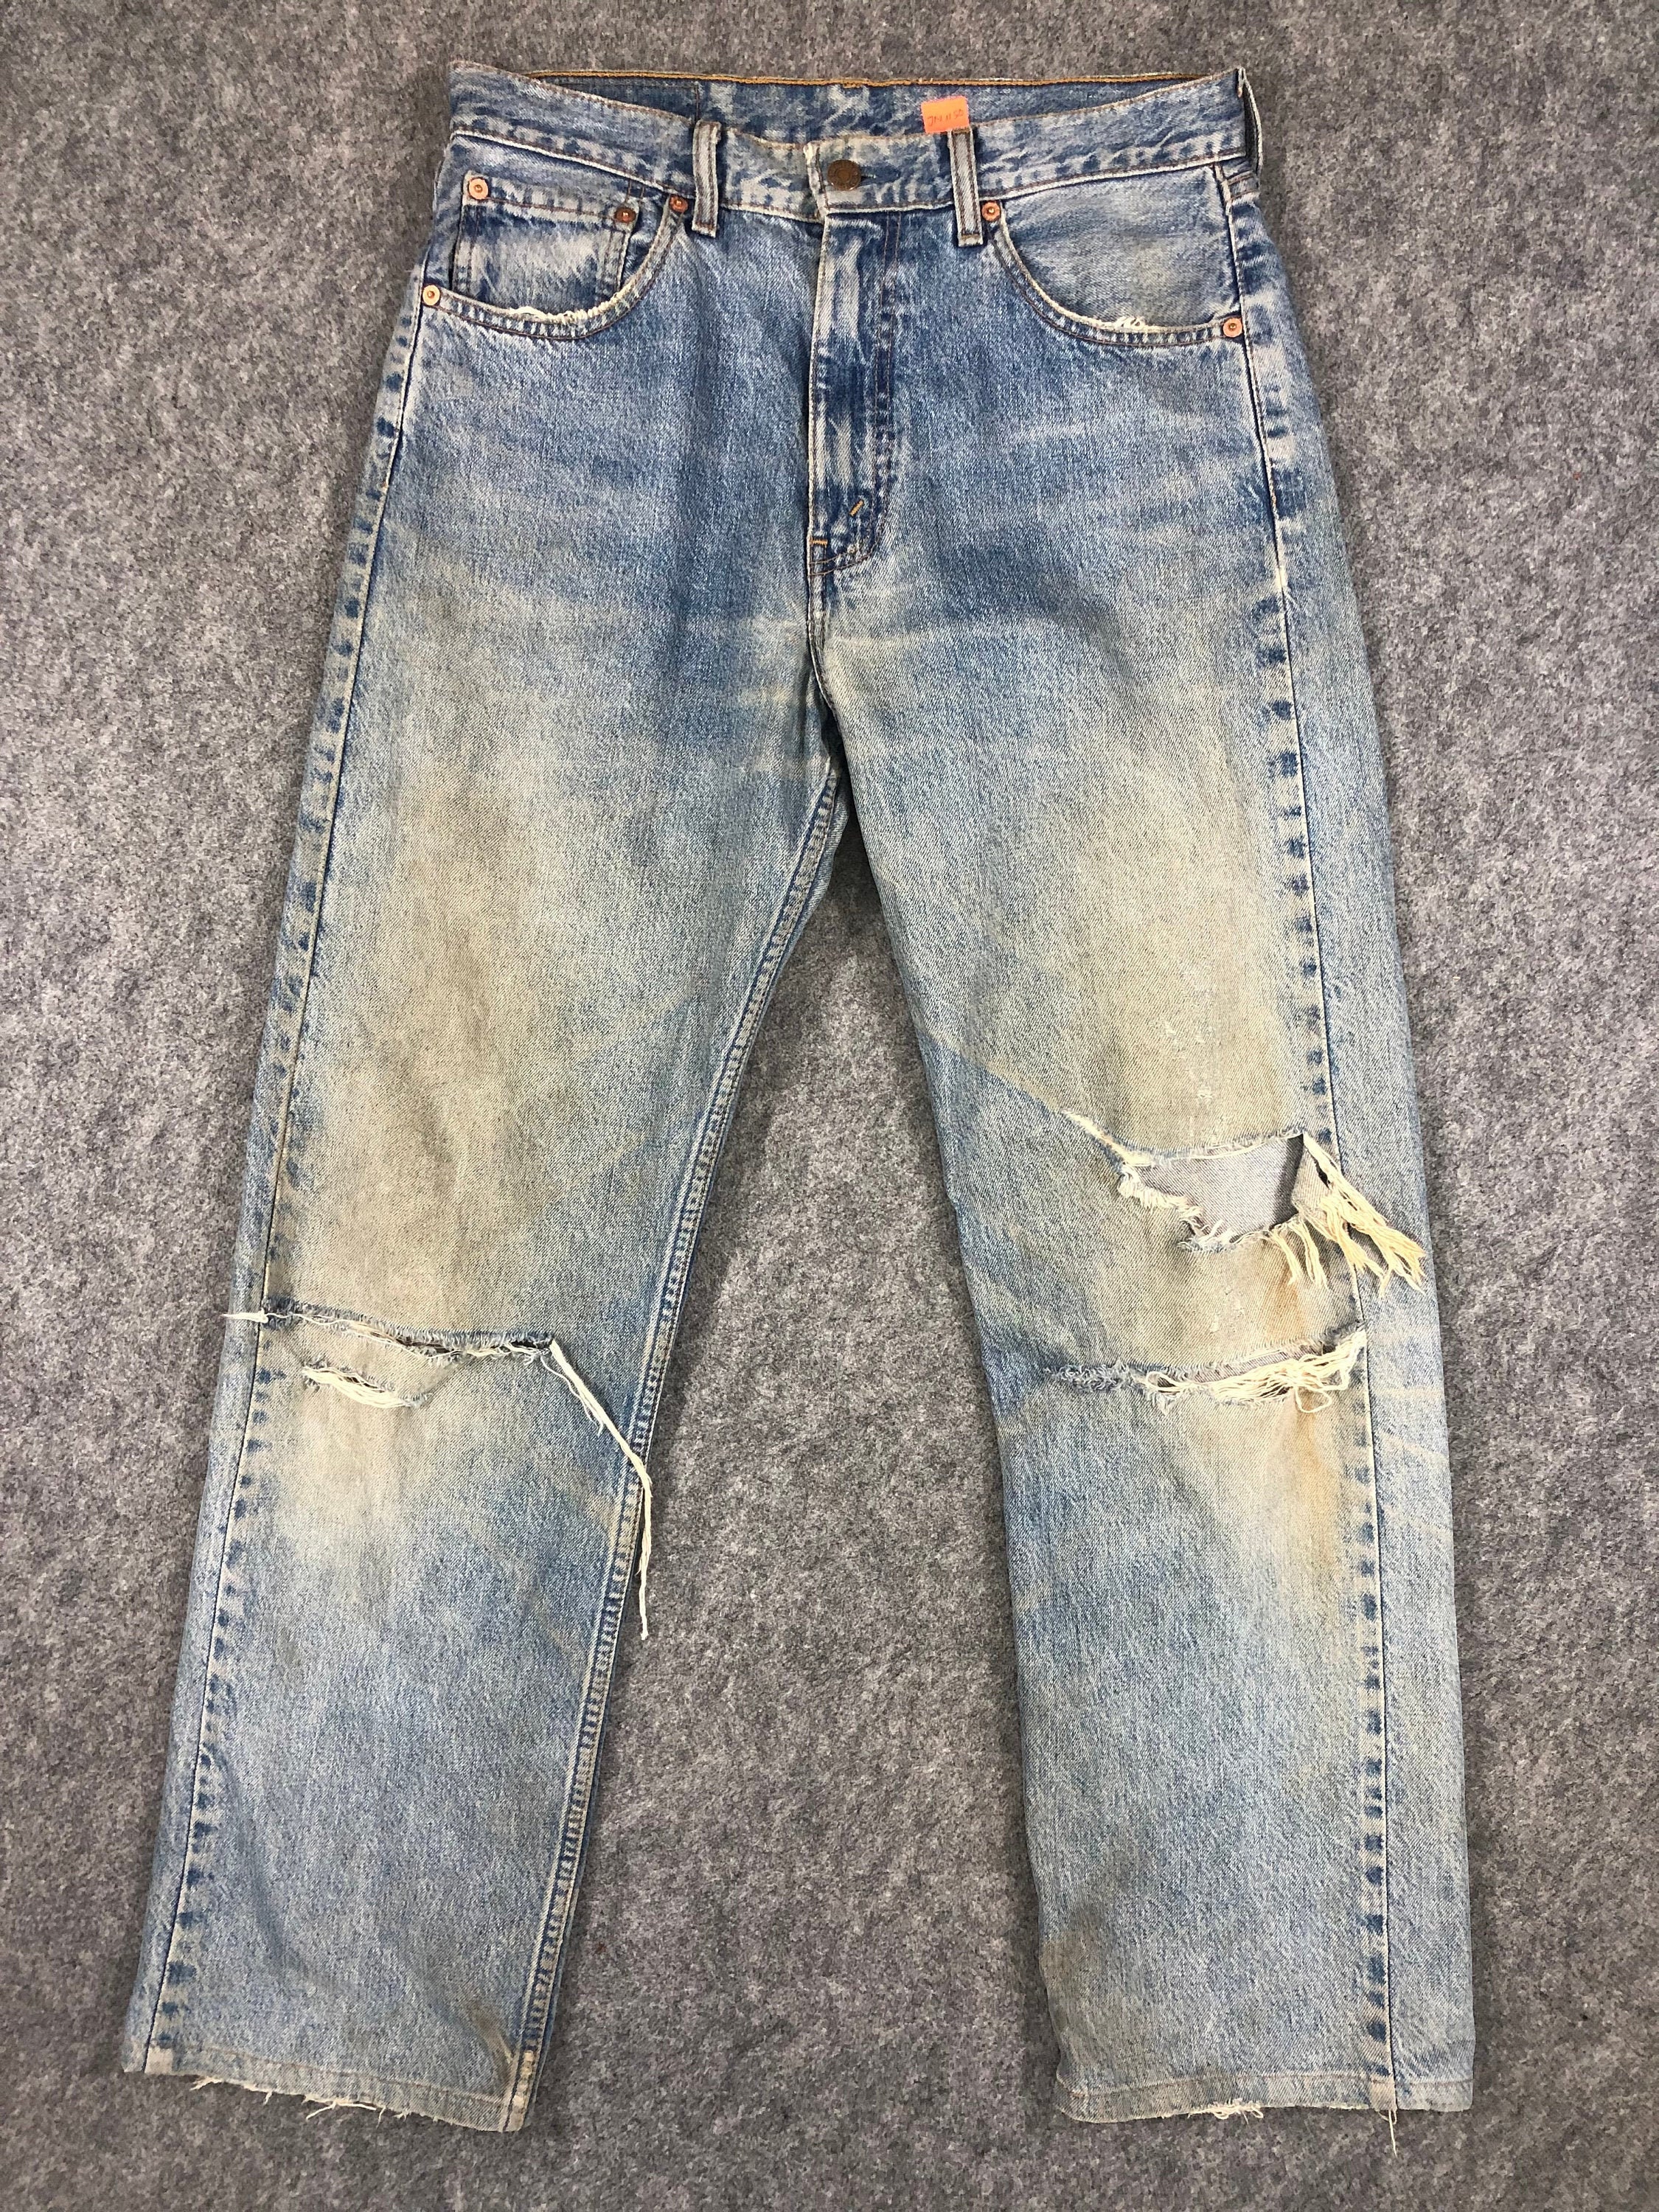 Vintage Levi's 512 Light Wash Jeans 32x30 Denim Red Tab - Etsy